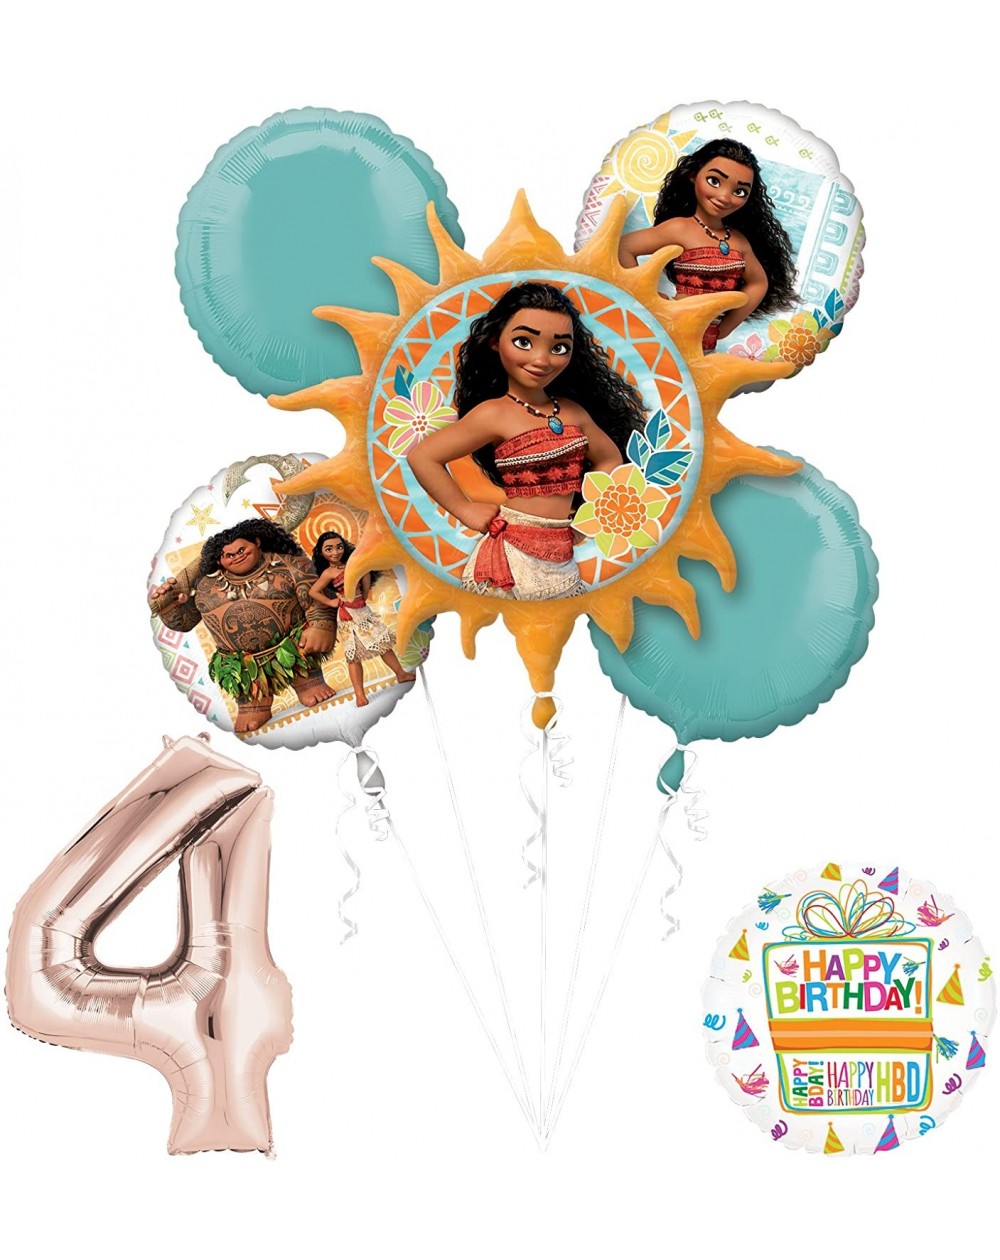 Balloons Moana 4th Birthday party Supplies and Princess Balloon Bouquet Decorations - CV1897UN50N $21.93